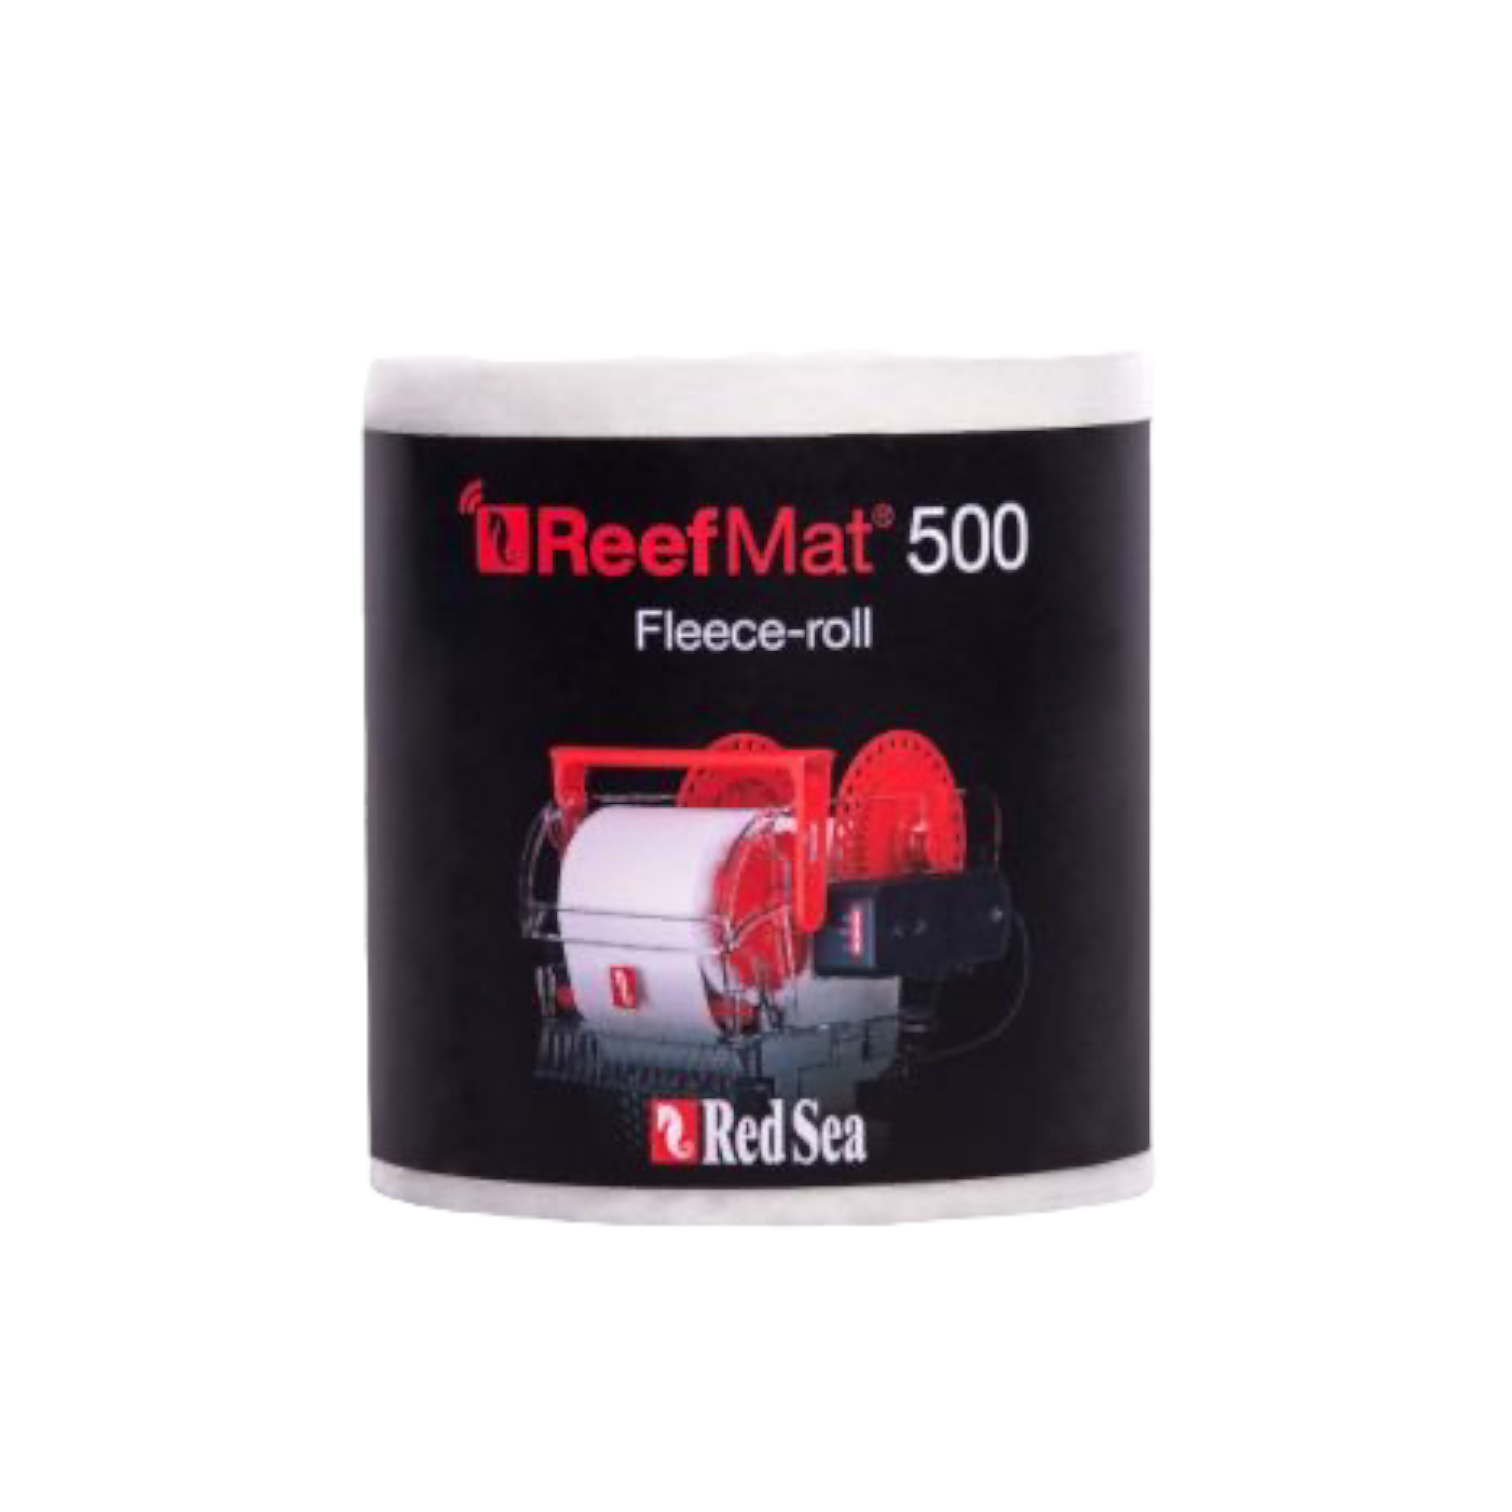 Red Sea ReefMat® 500 fleece-roll